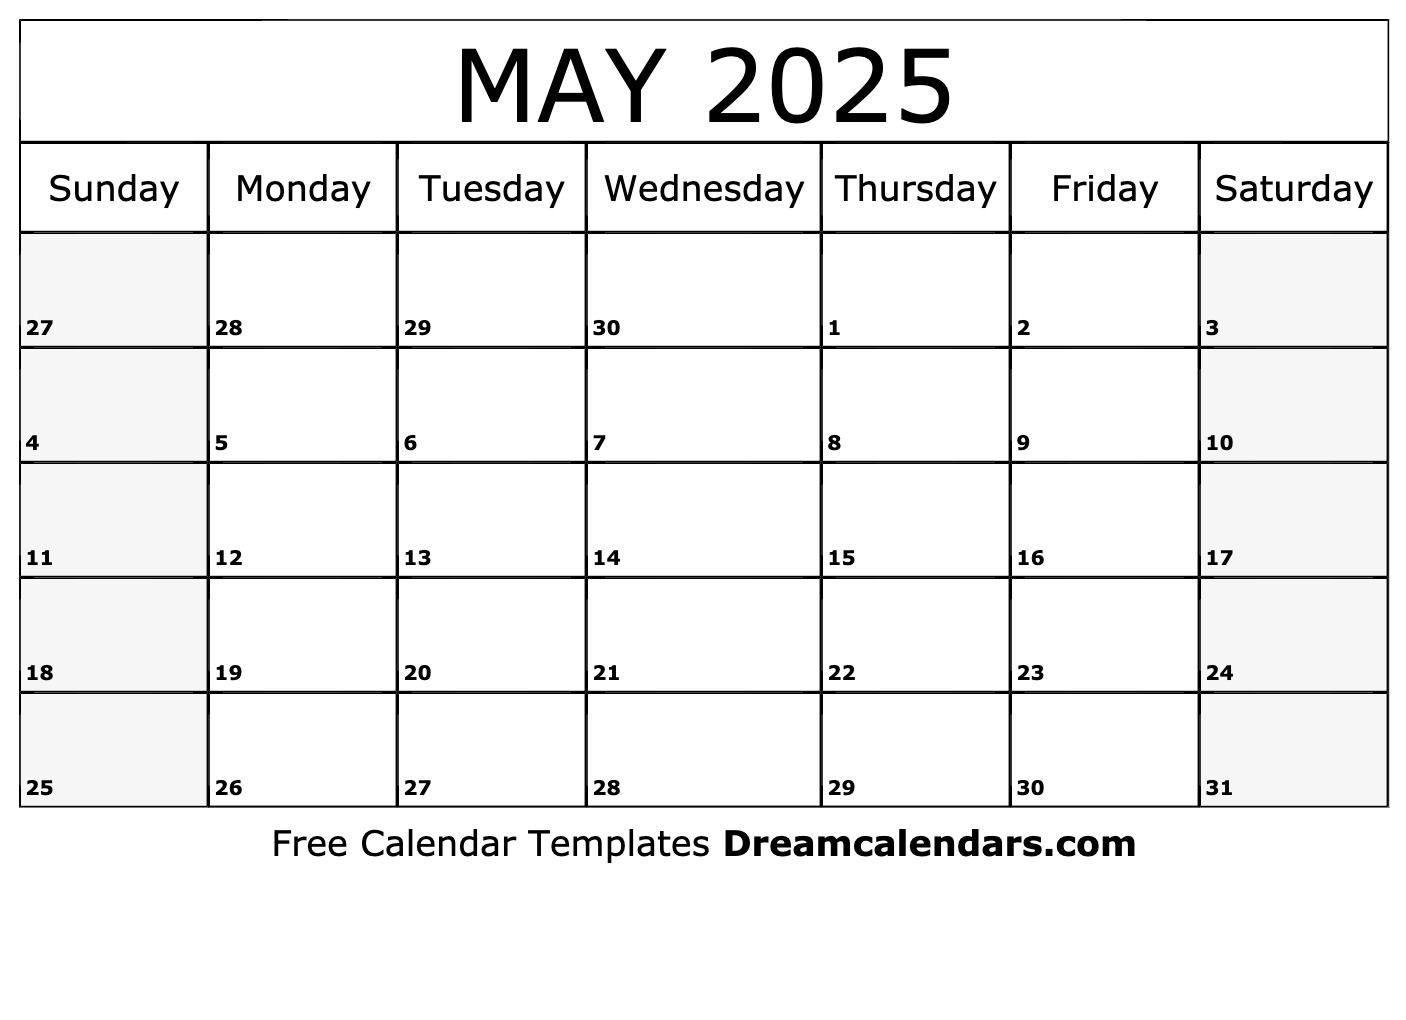 printable-may-2025-calendar-free-printable-calendars